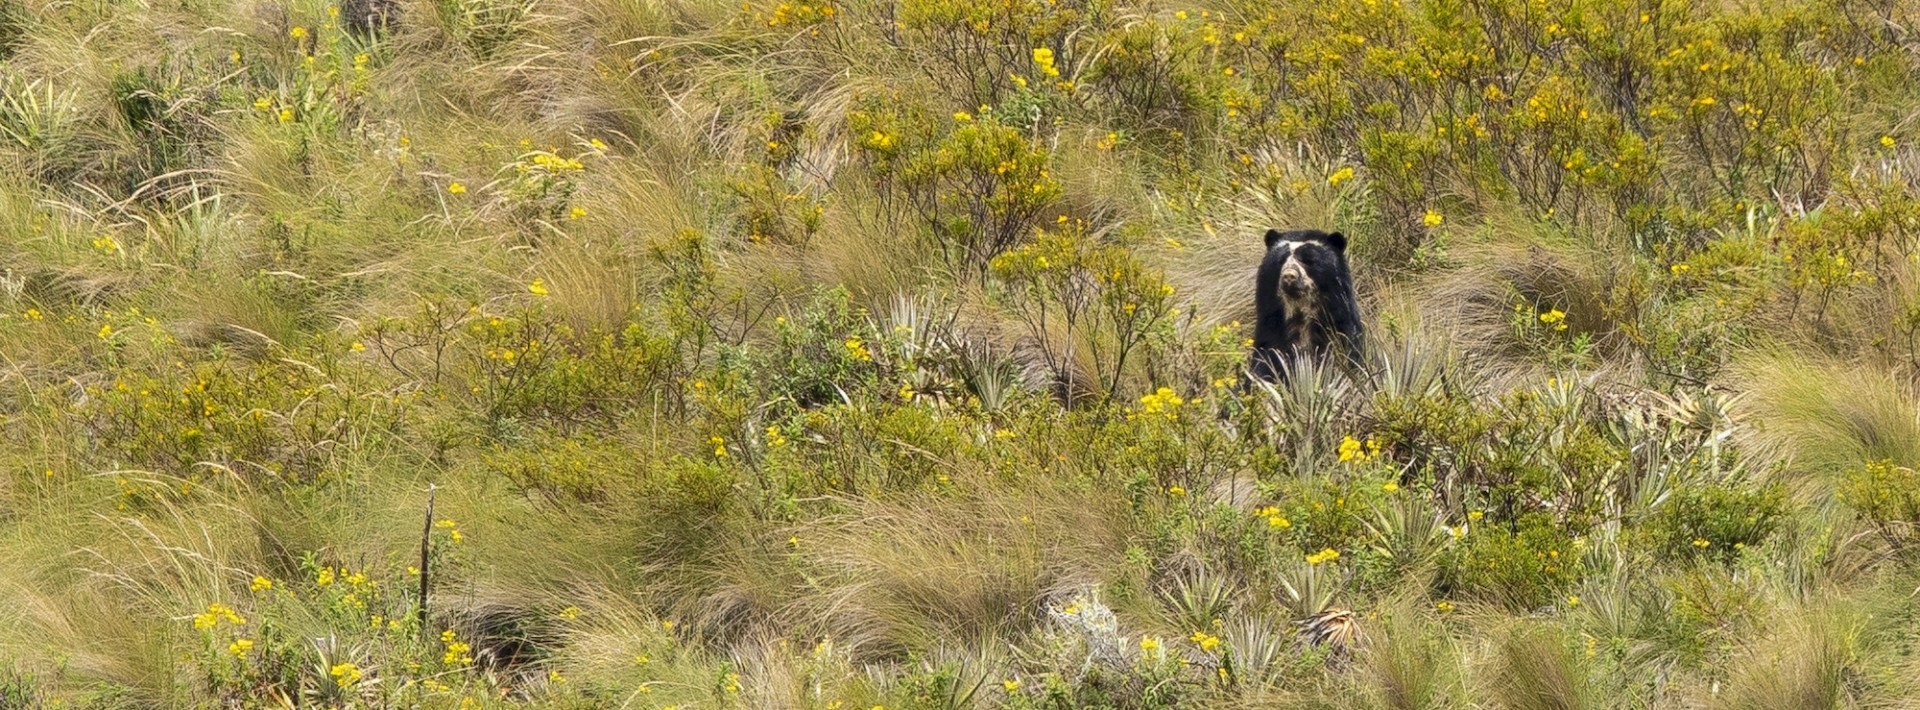 spectacled bear habitat